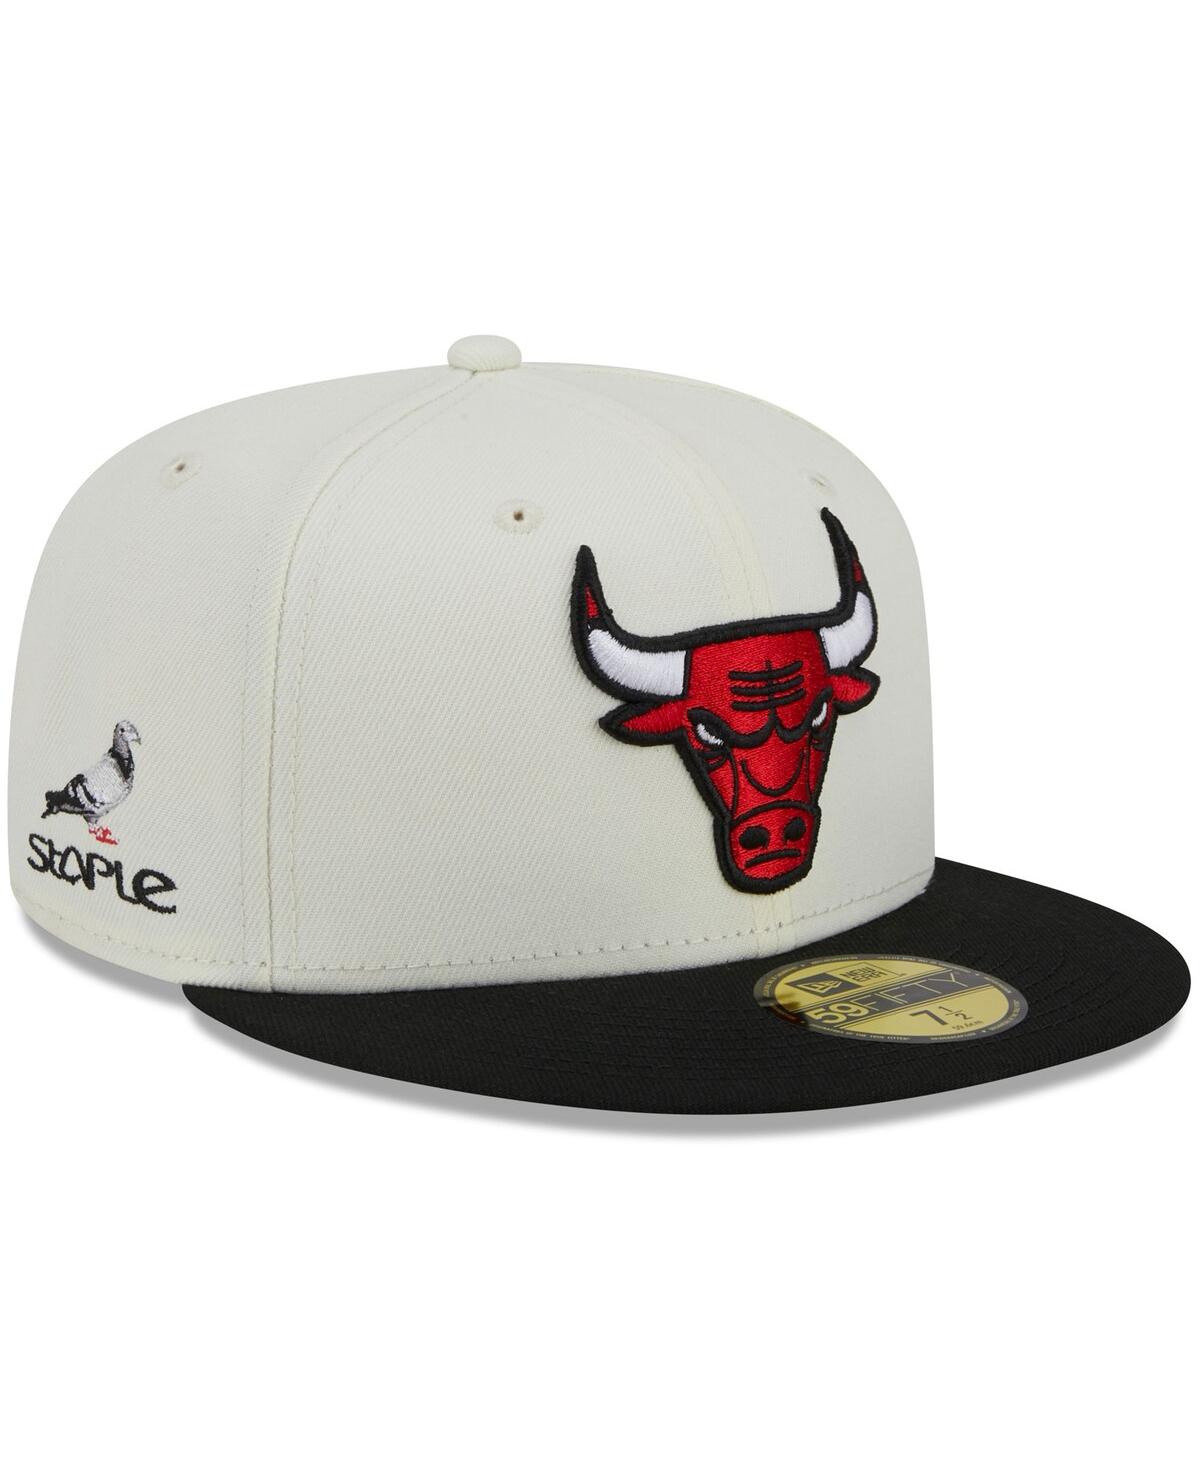 Men's New Era x Staple Cream, Black Chicago Bulls Nba x Staple Two-Tone 59FIFTY Fitted Hat - Cream, Black